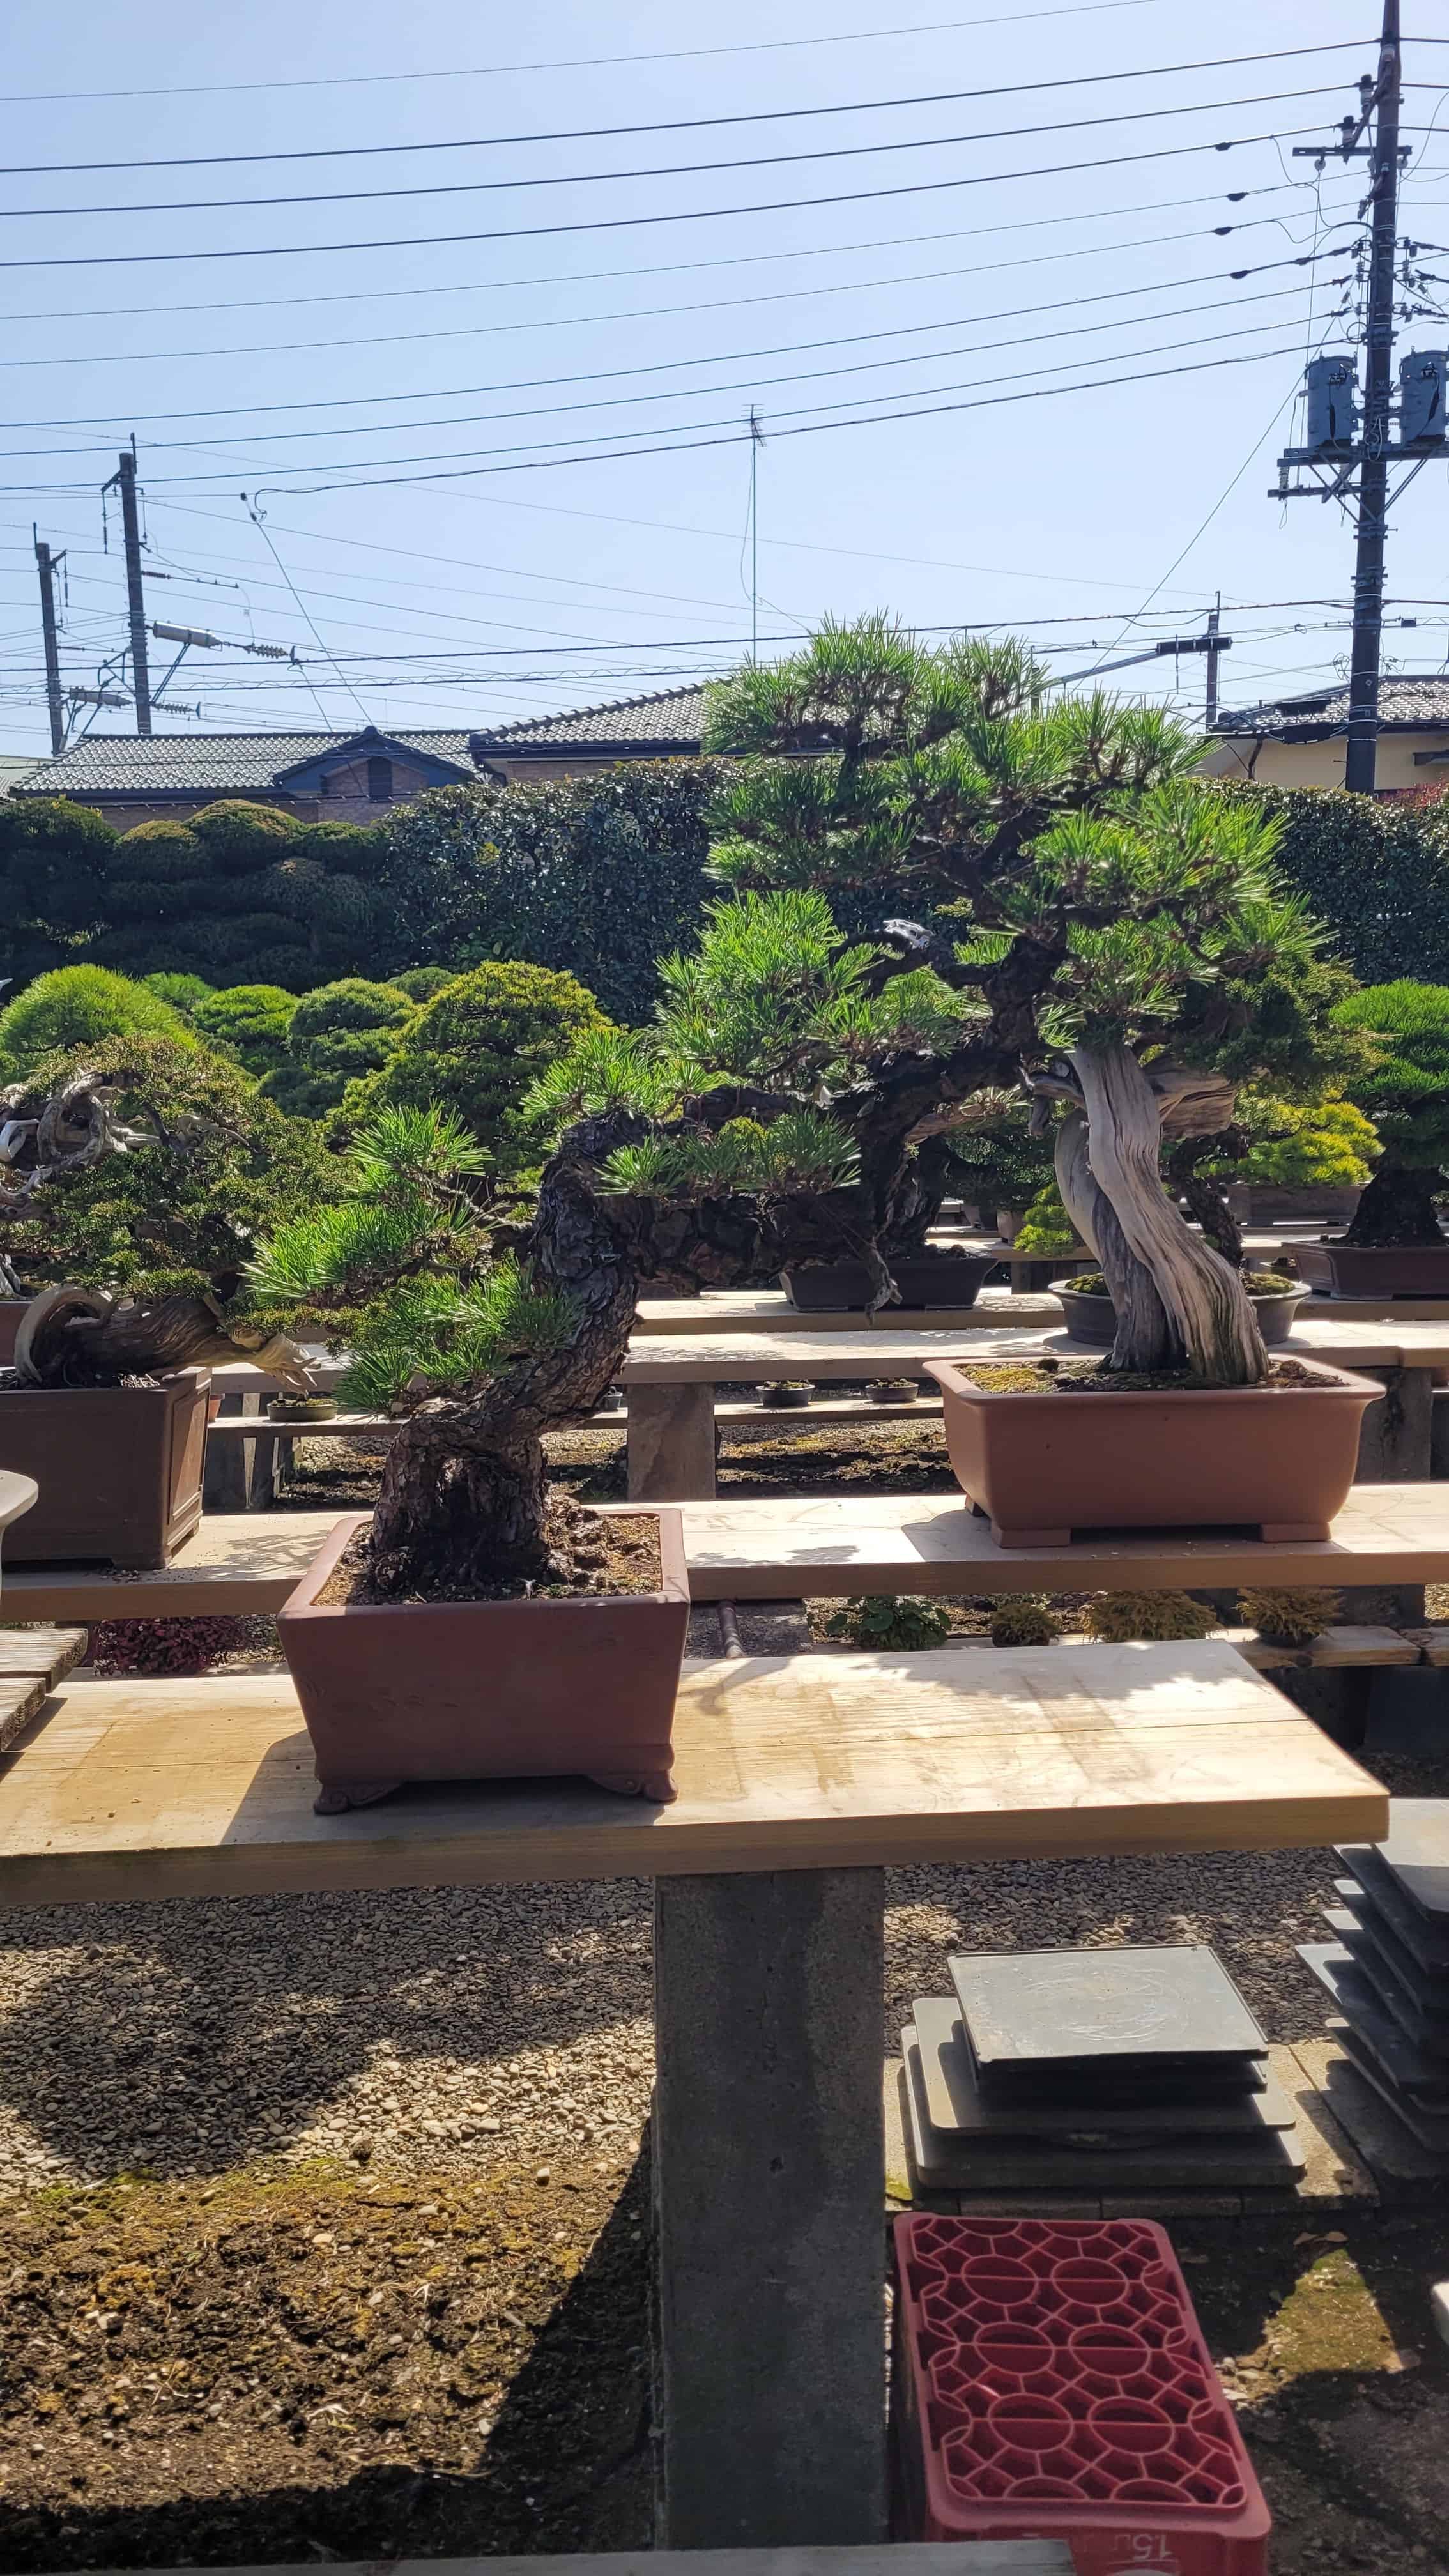 A pine bonsai tree from kimura in Japan